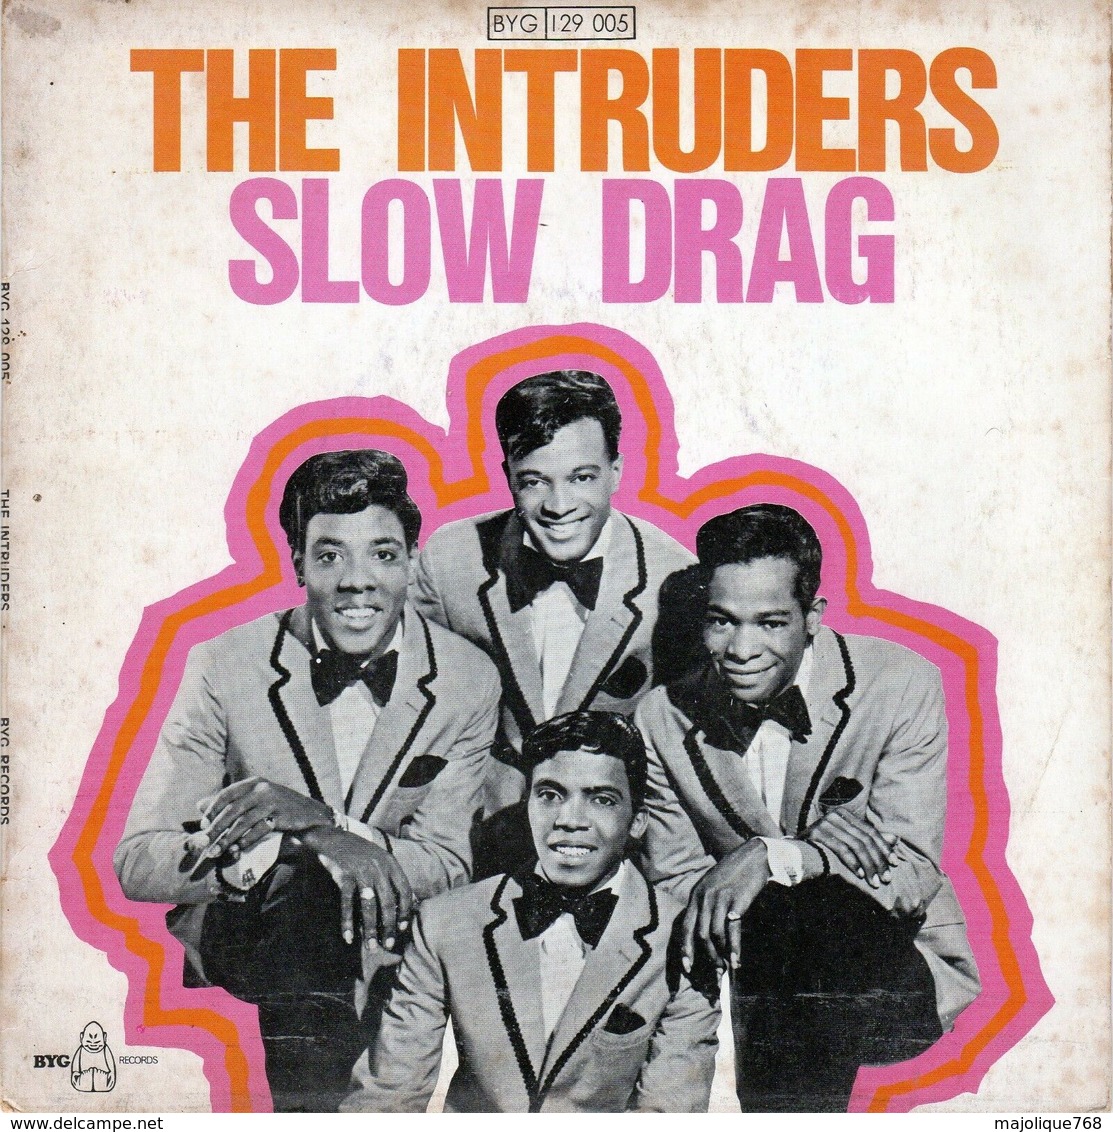 Disque The Intruders - Slow Drag - BYG 129005 - 1968 - - Soul - R&B